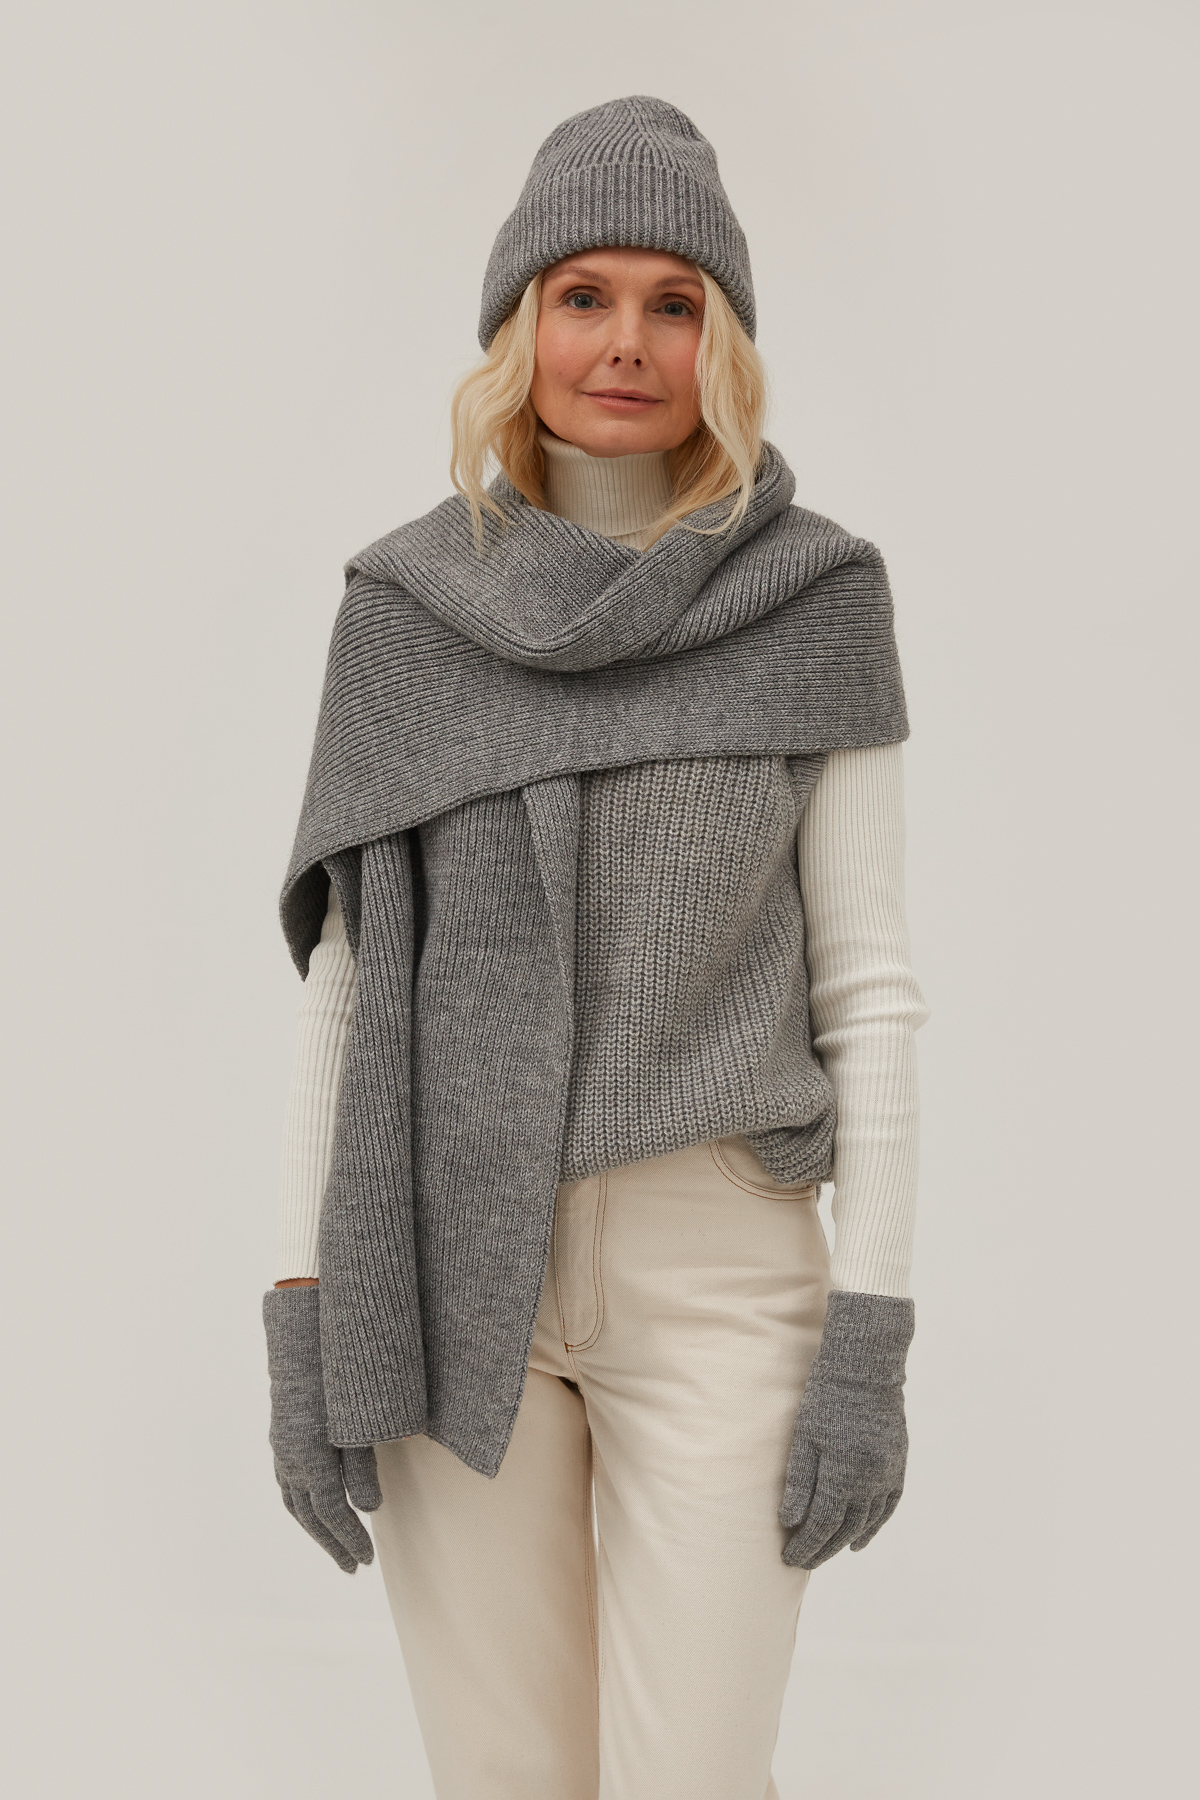 Knitted woolen grey scarf, photo 1